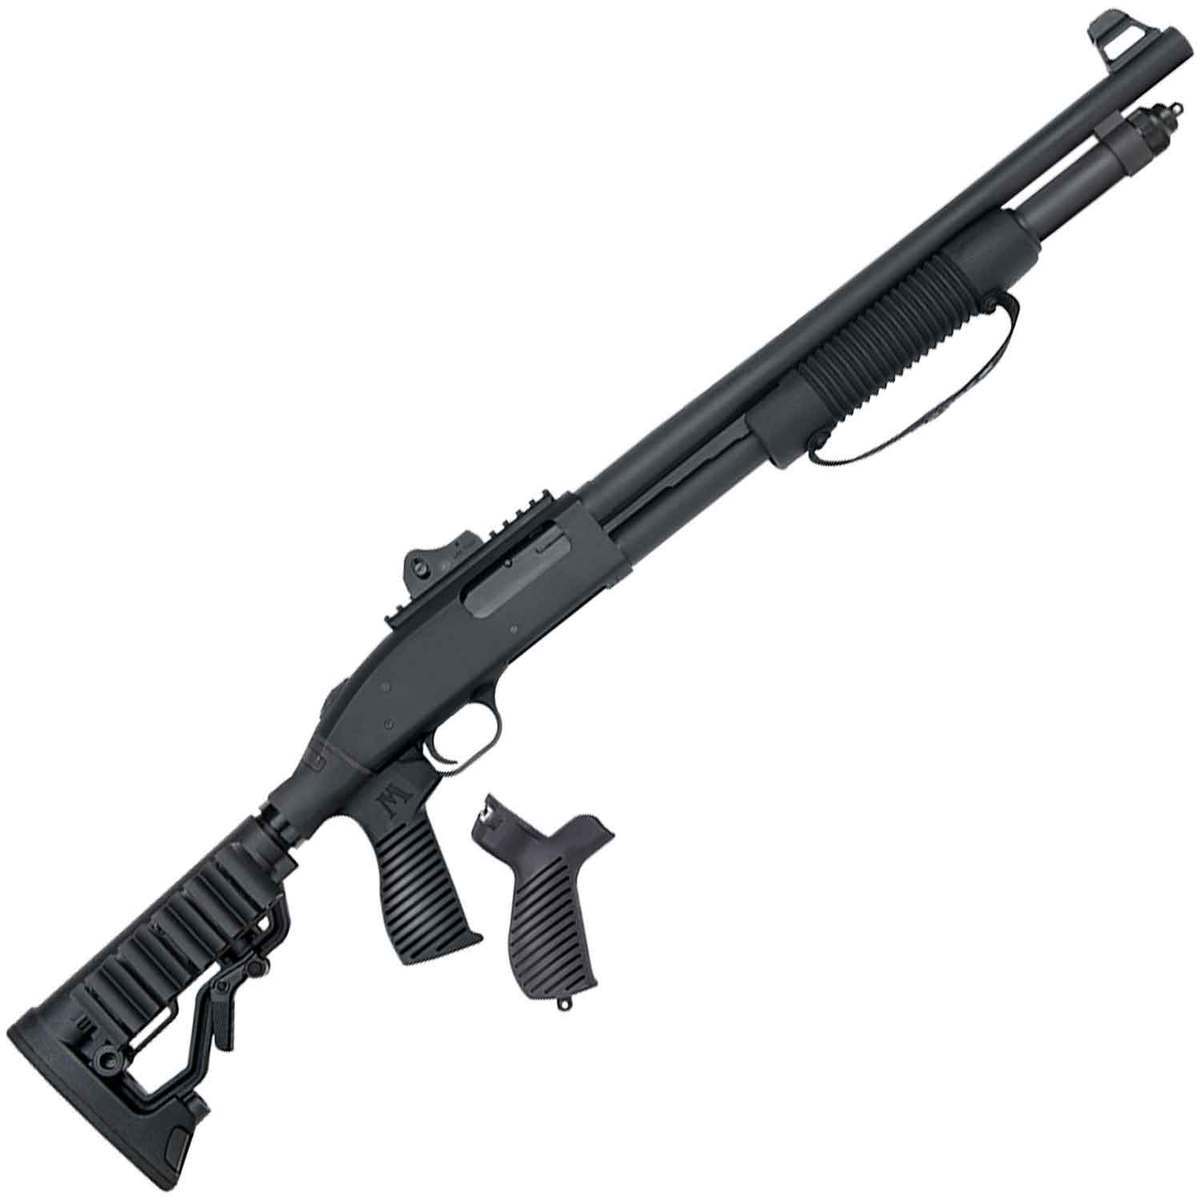 https://www.sportsmans.com/medias/mossberg-590-spx-flex-pistol-grip-kit-black-12ga-3in-pump-action-shotgun-185in-1625180-1.jpg?context=bWFzdGVyfGltYWdlc3w0NTI5NXxpbWFnZS9qcGVnfGltYWdlcy9oODYvaDJkLzk3NDcyNTY5MzQ0MzAuanBnfGVkY2ZjZDU1NjA4MTdiOTM1Nzc0OGFmZGFhOGZjMDc3ODU4YzhlODBkMzM0OWY5ZGIxNjEwZTcyYjlkYjQ3NDk